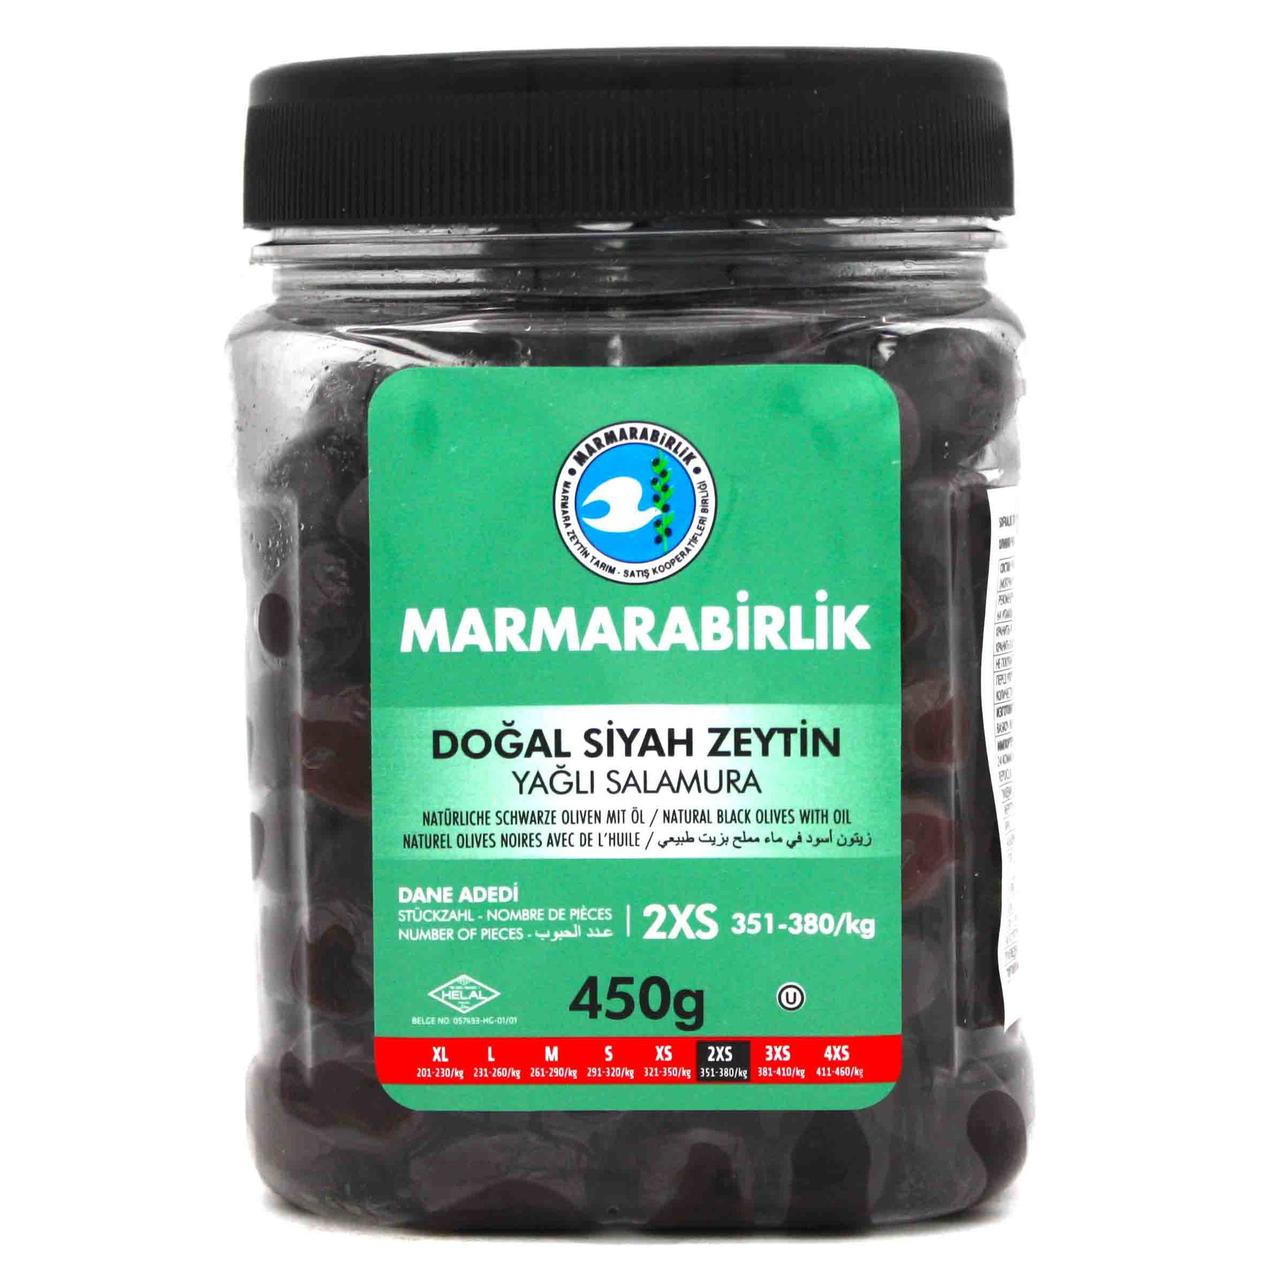 Маслины Marmarabirlik в масле 2XS, 400 гр.(Турция)